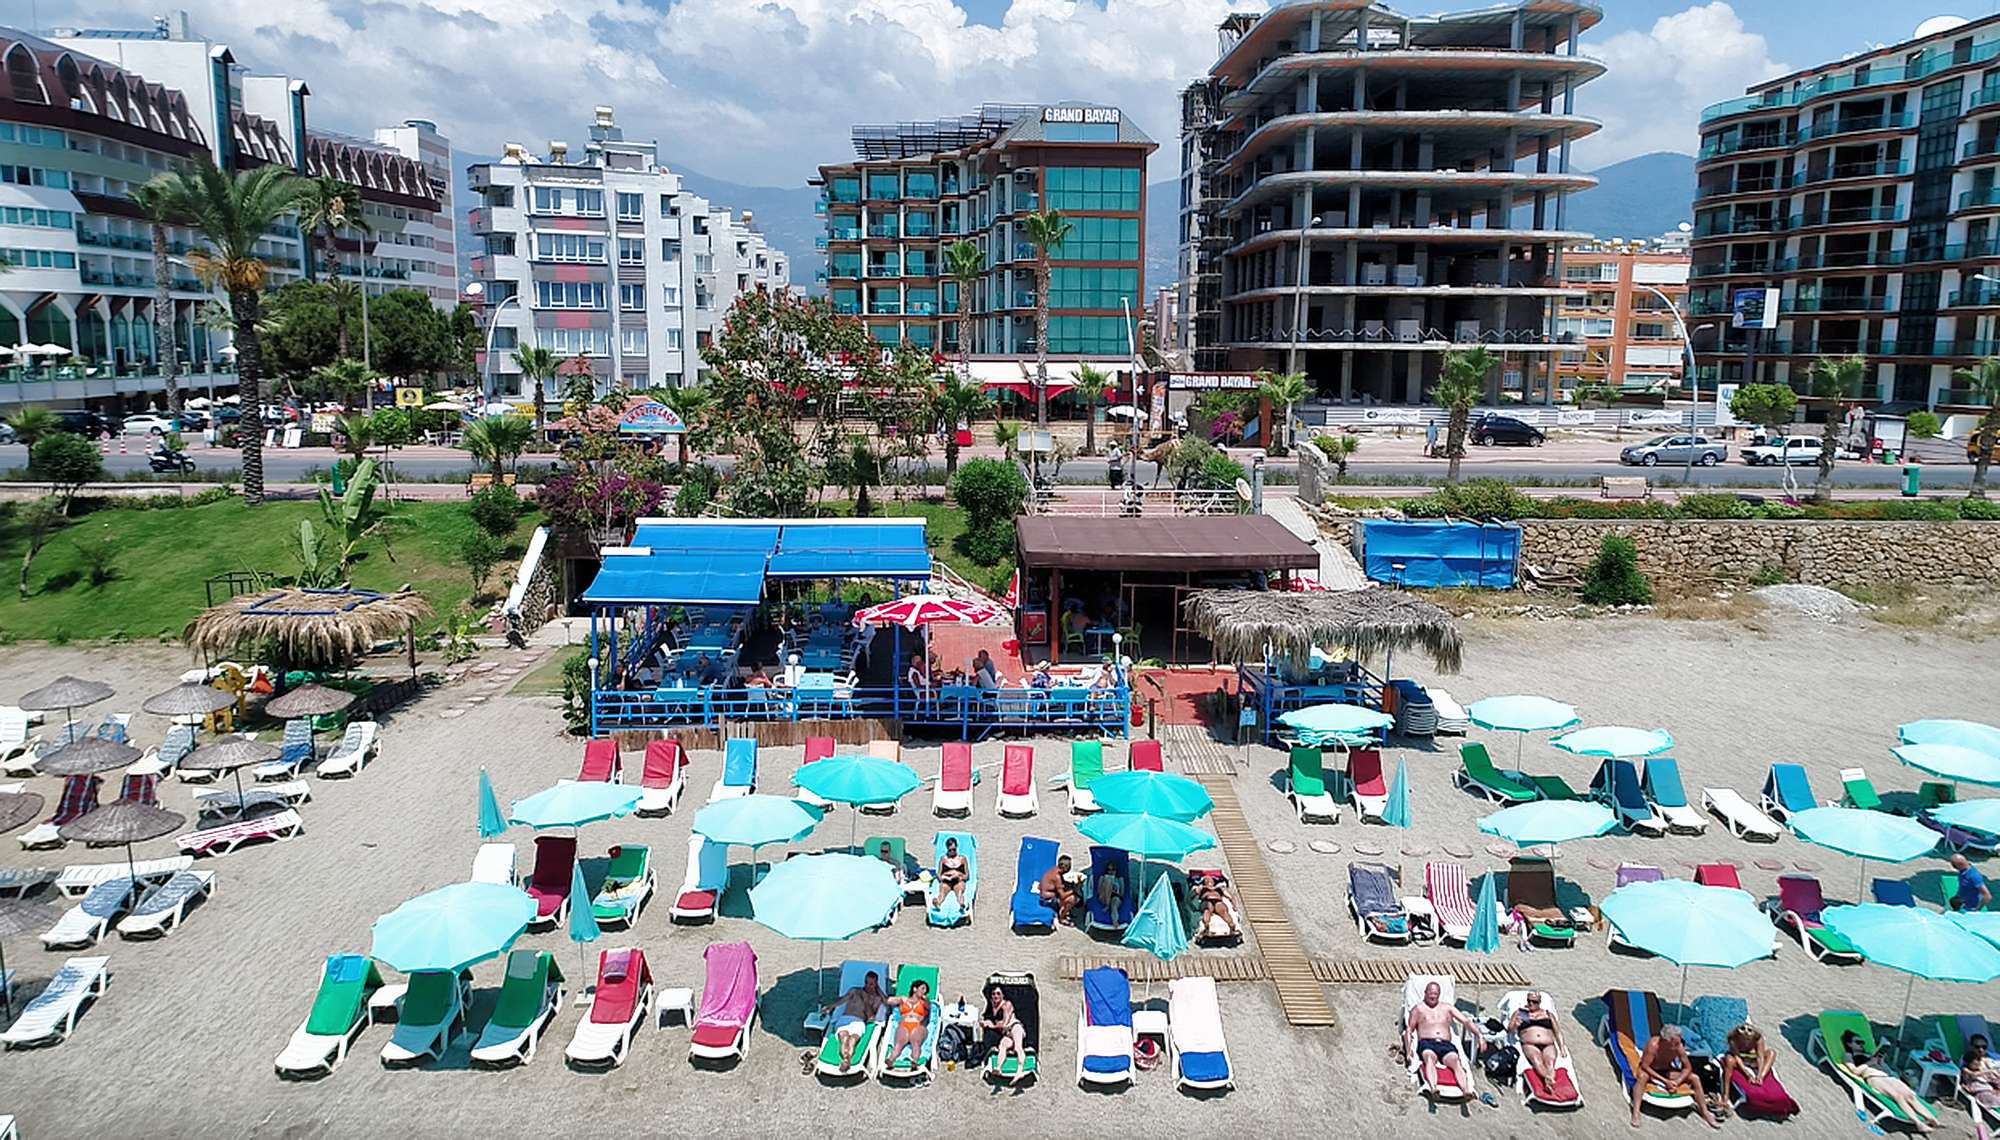 Grand Bayar Beach Hotel 4. Отель в Турции Club Bayar Beach. Отель Баяр Бич Аланья Турция. Туркмен отель Алания Турция.